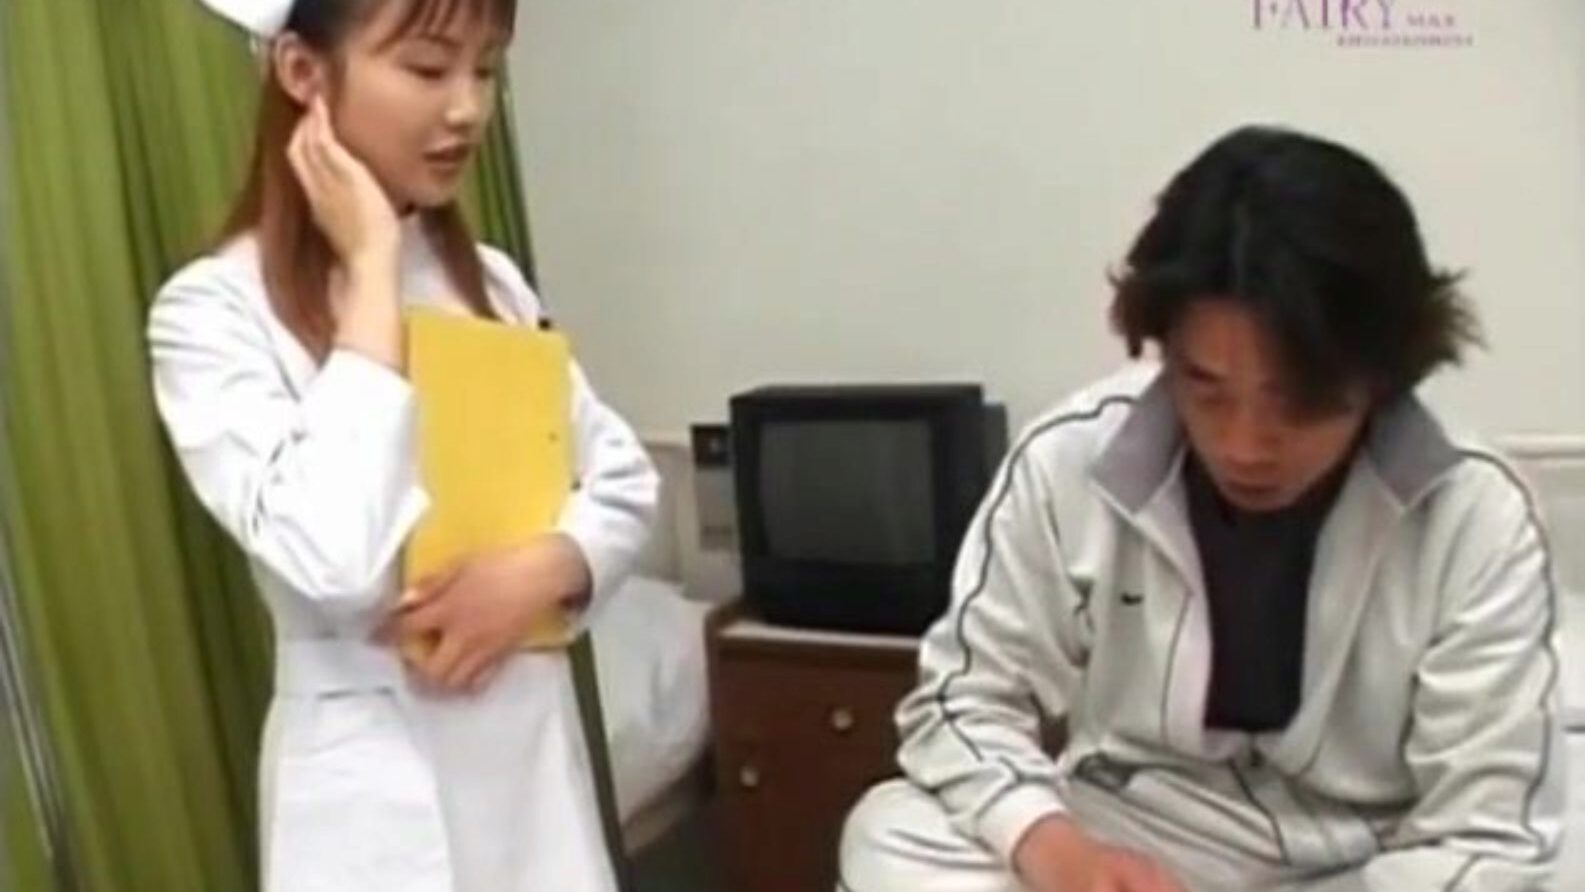 Rina Usui versaute Krankenschwester nimmt Patienten schlong in Gesichtsloch und - mehr bei hotajp com